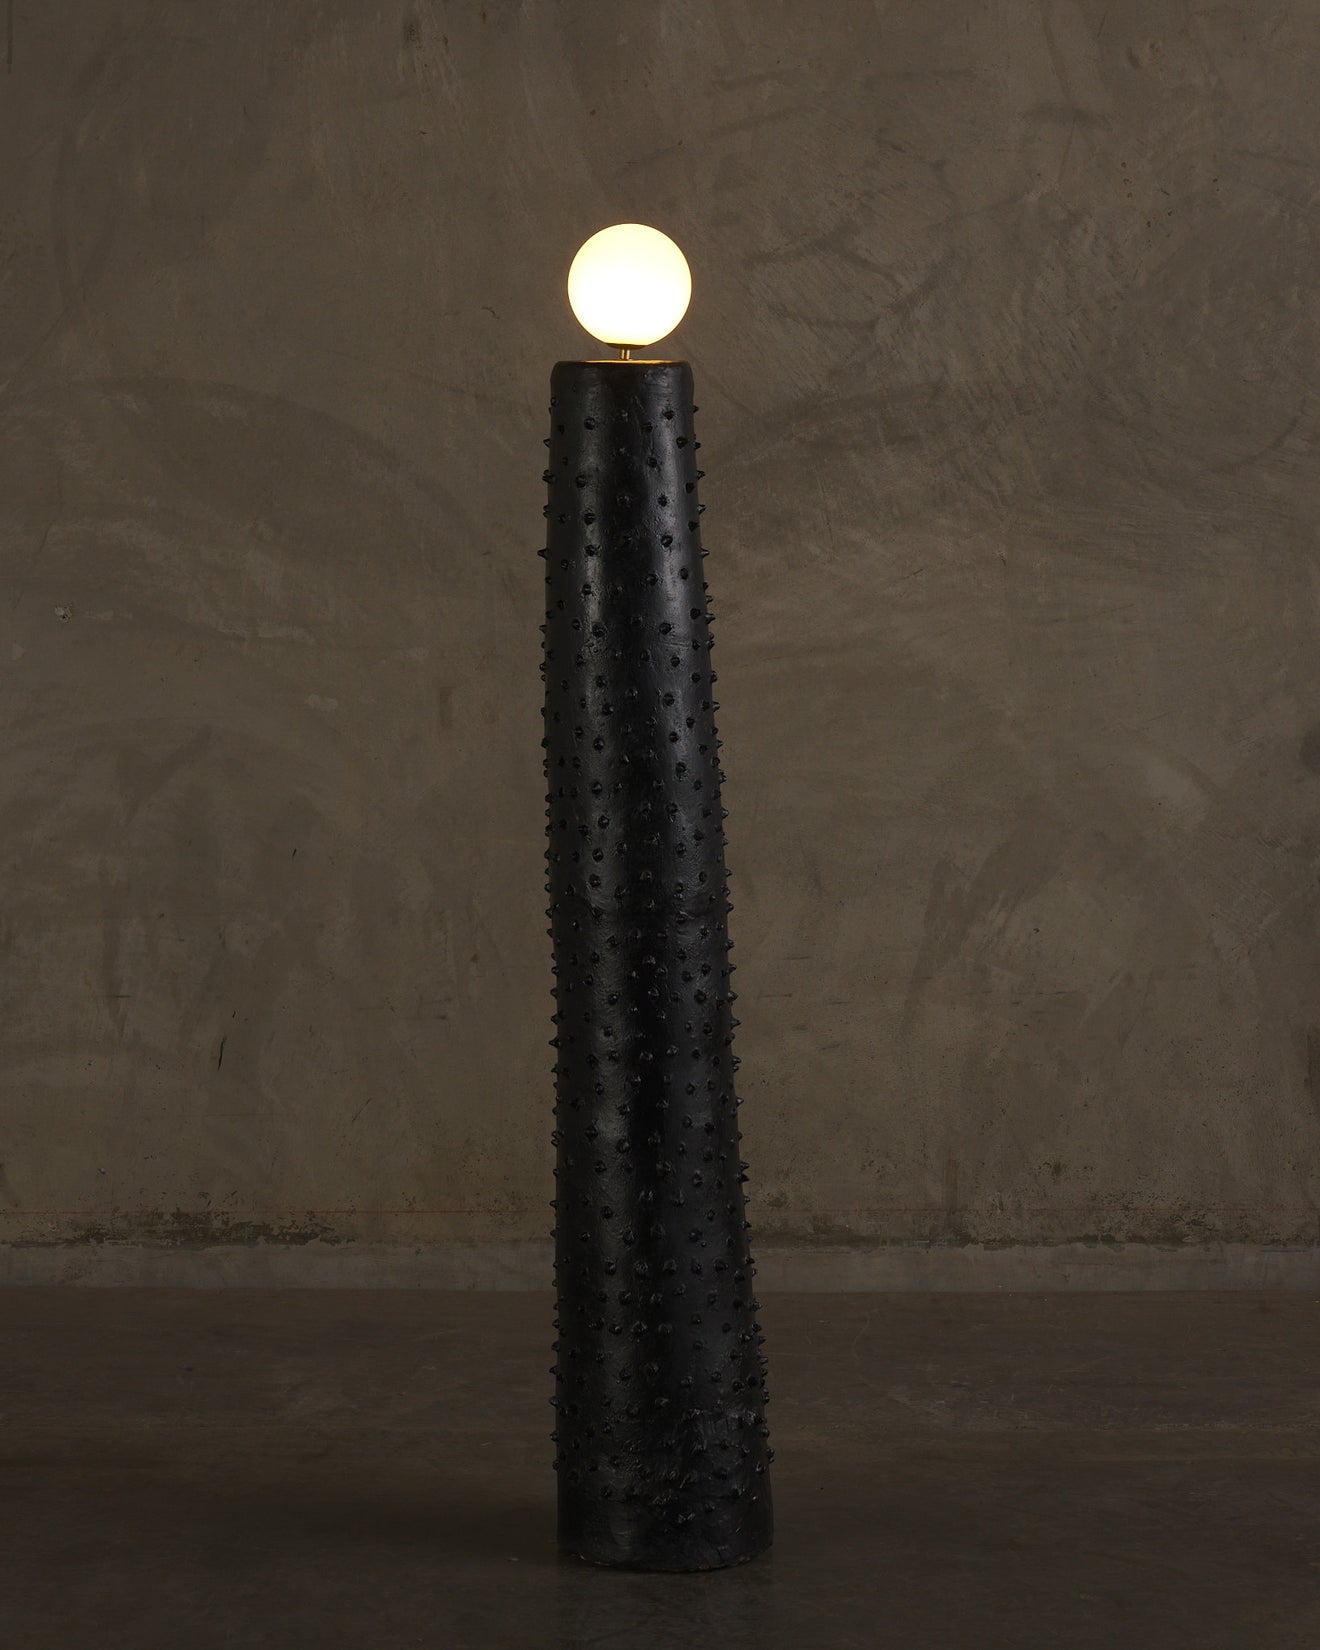 CHUCH STUDIO 'CEIBA' FLOOR LAMP